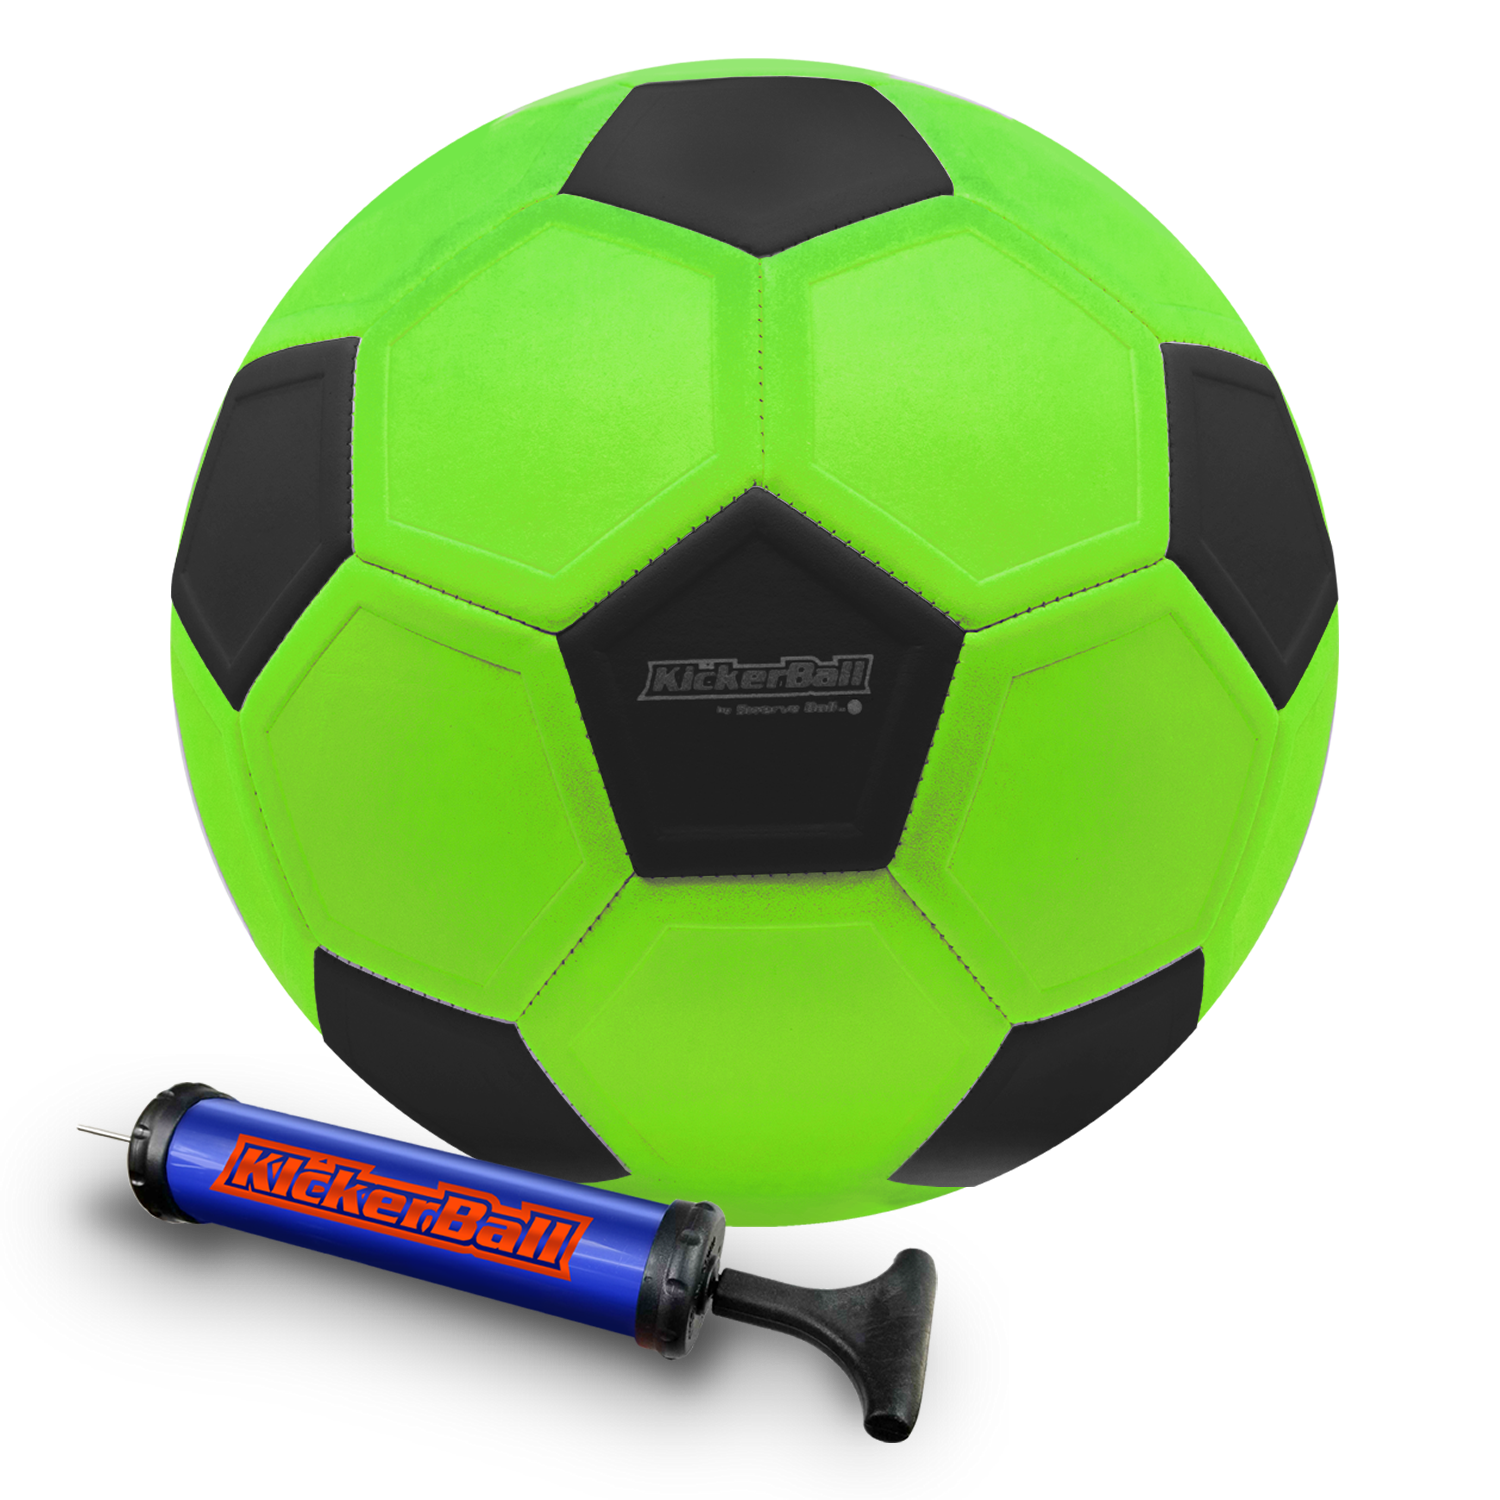 Swerve Ball KickerBall Football - Orange 817889011900